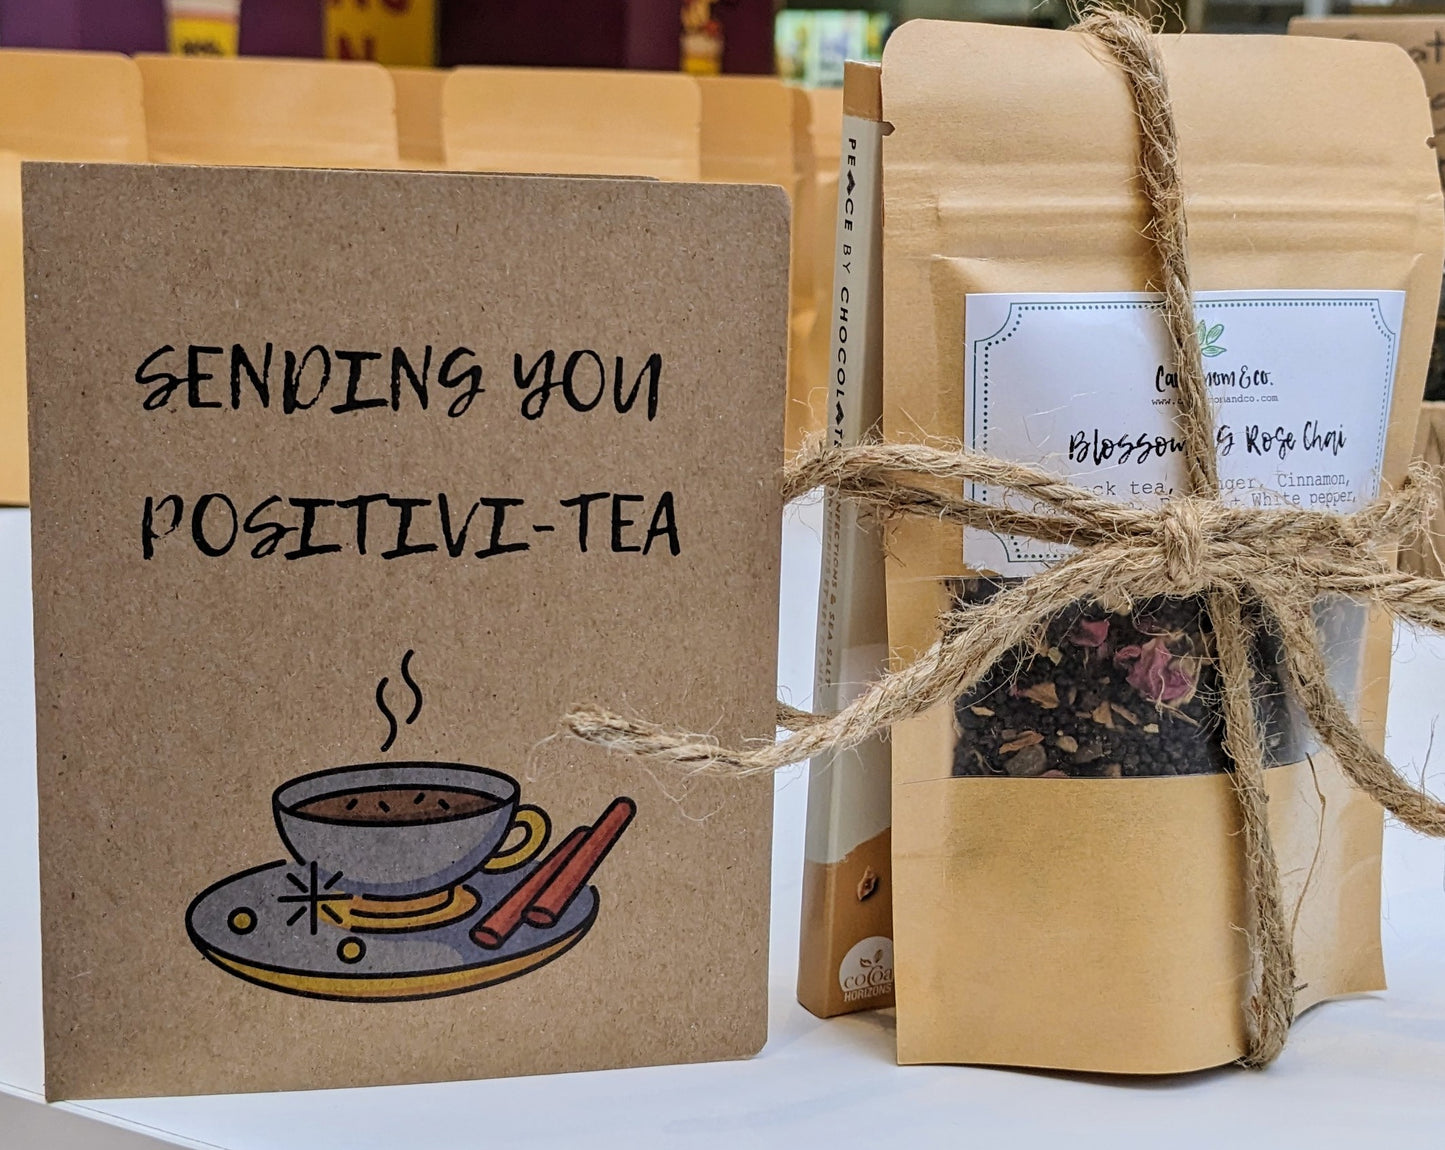 Tea and Peace by Chocolate bundle